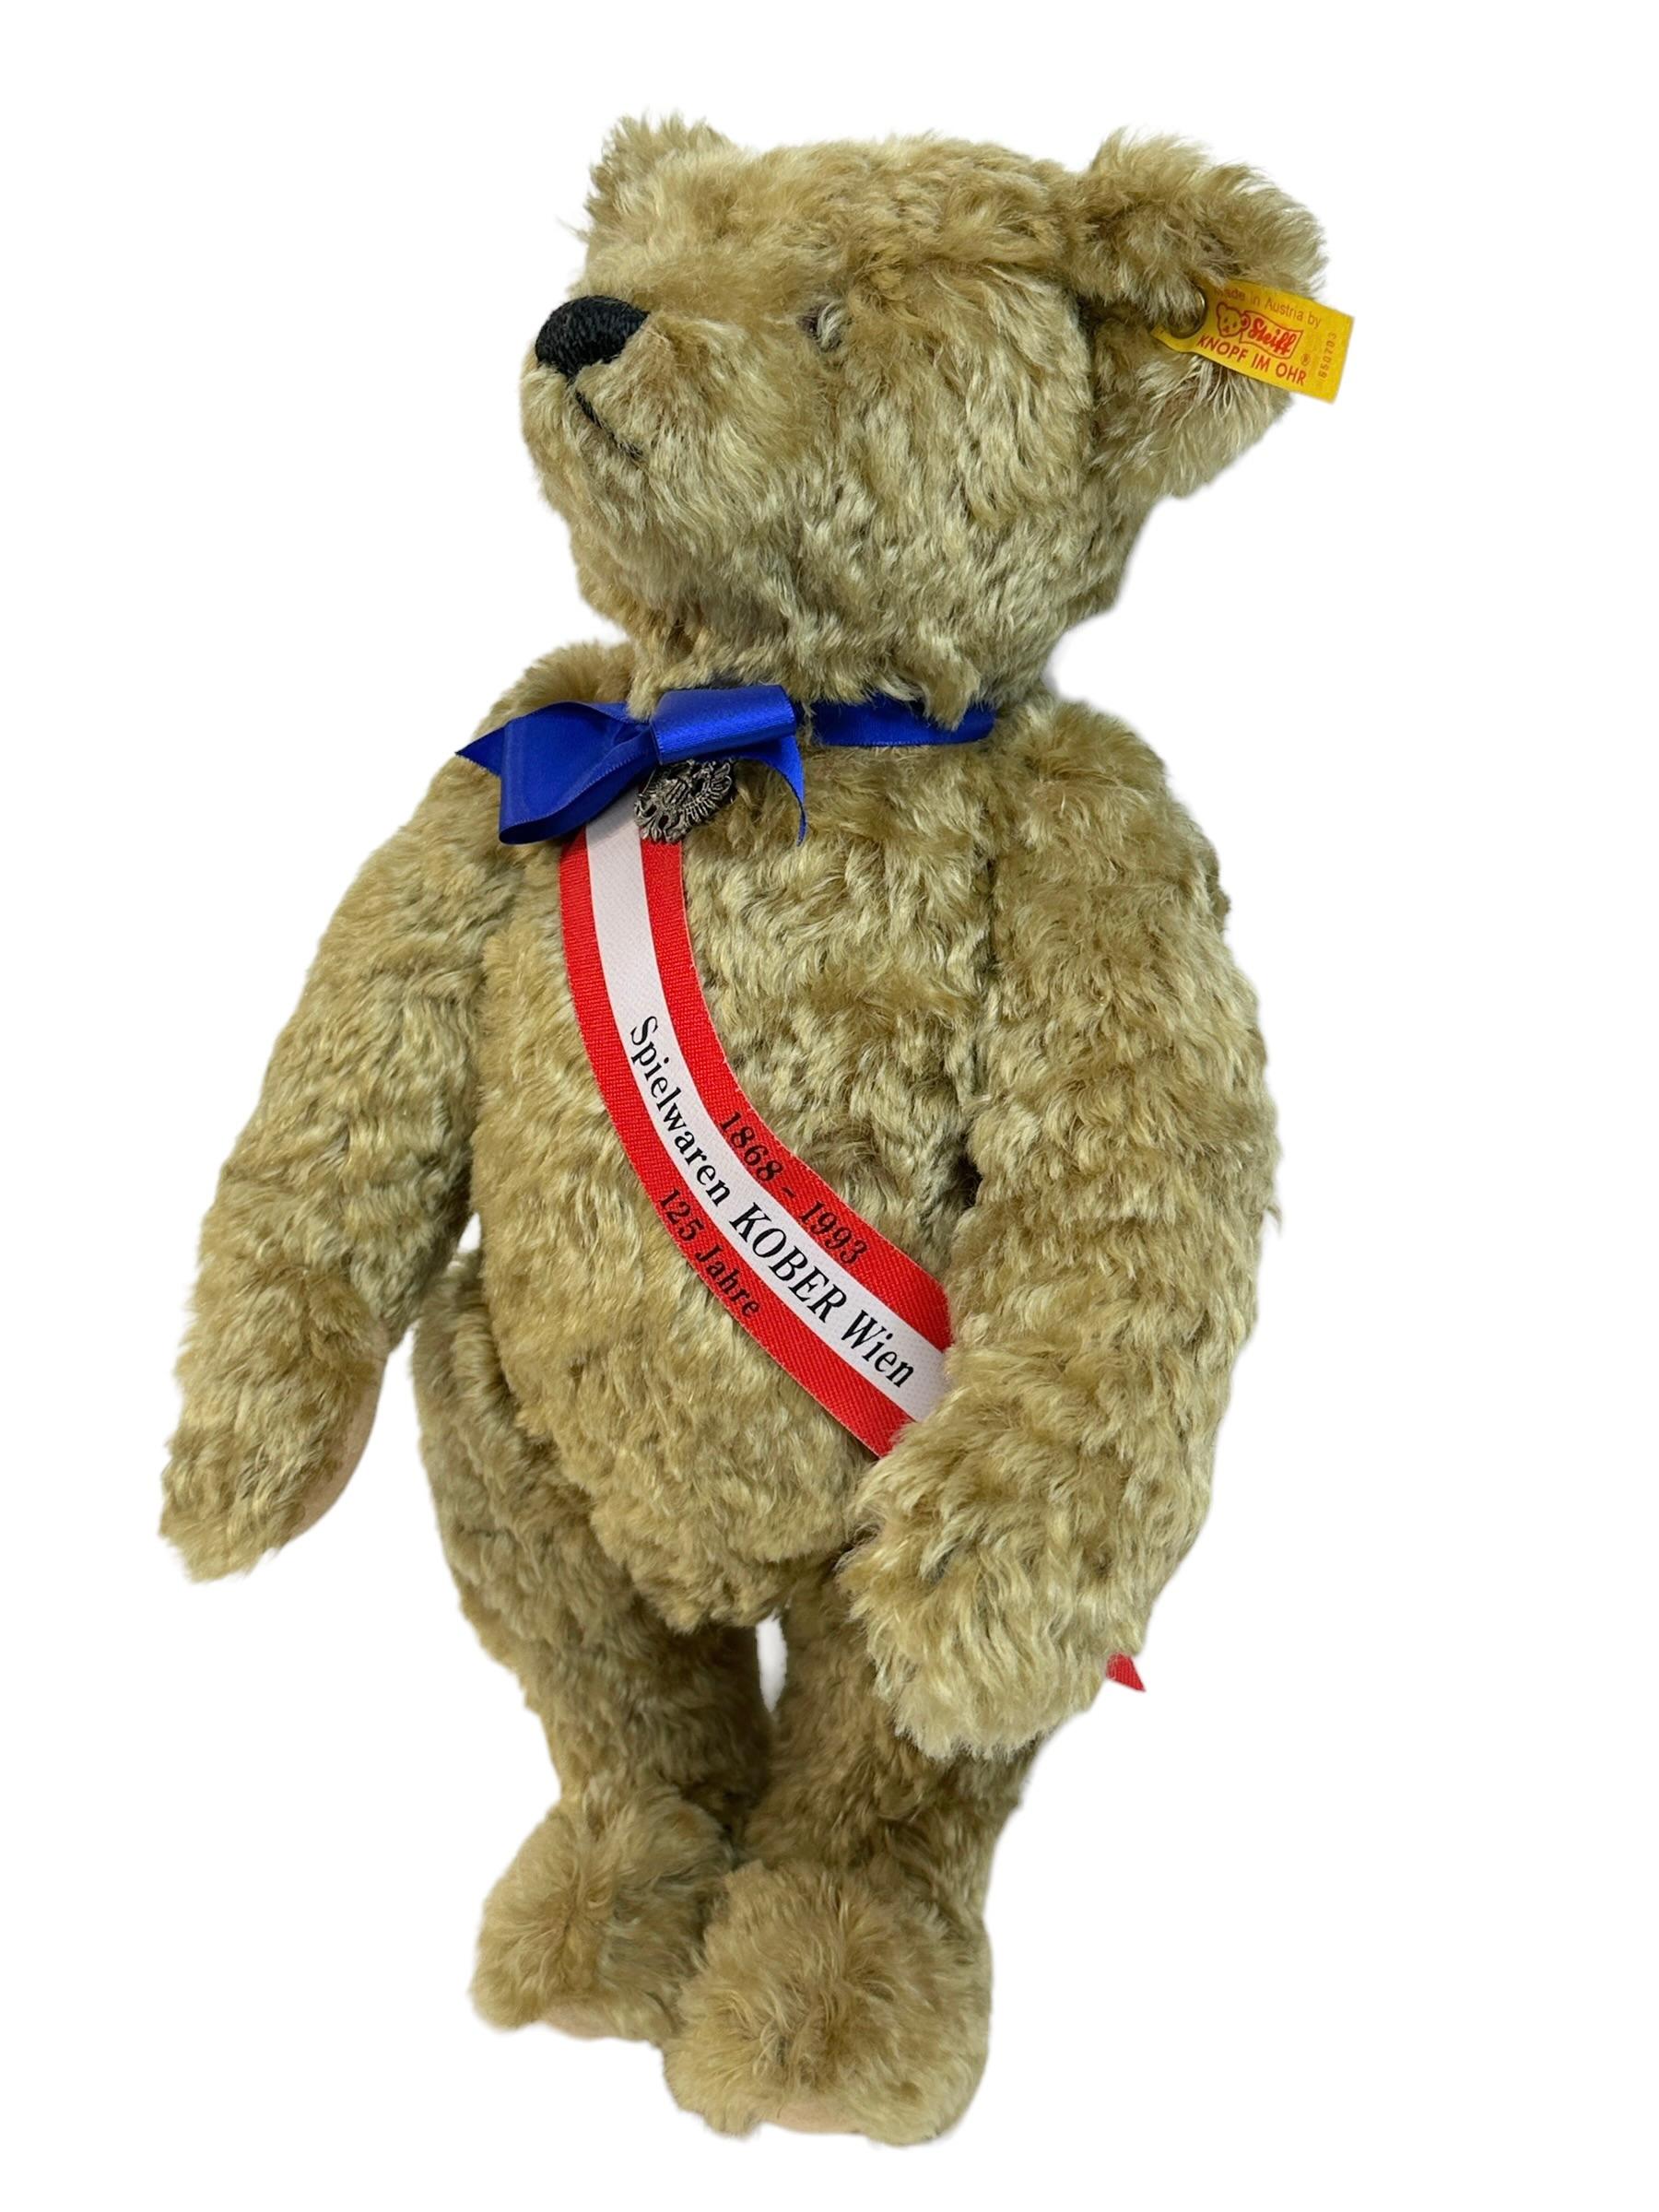 Steiff Collectible Teddy Bear Toy Store Kober Vienna exclusive, Vintage Austria For Sale 1